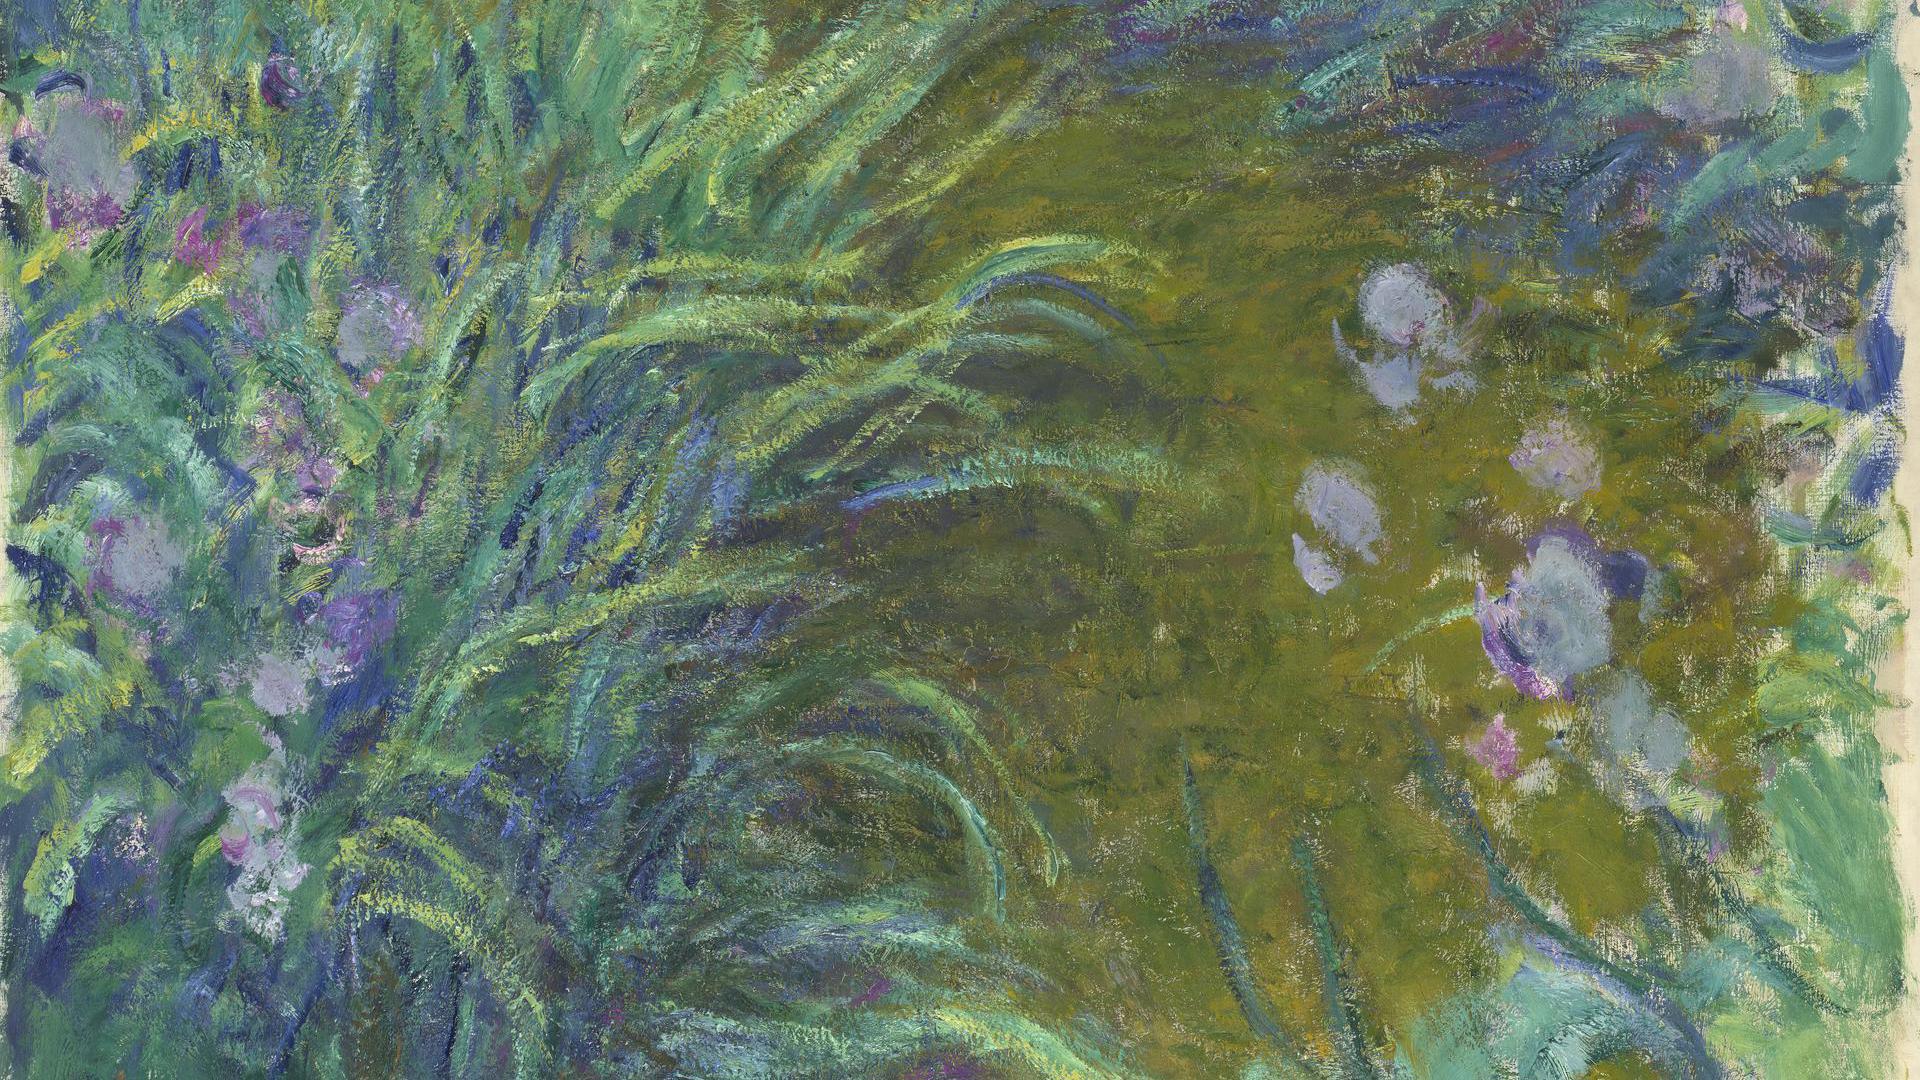 Irises by Claude Monet